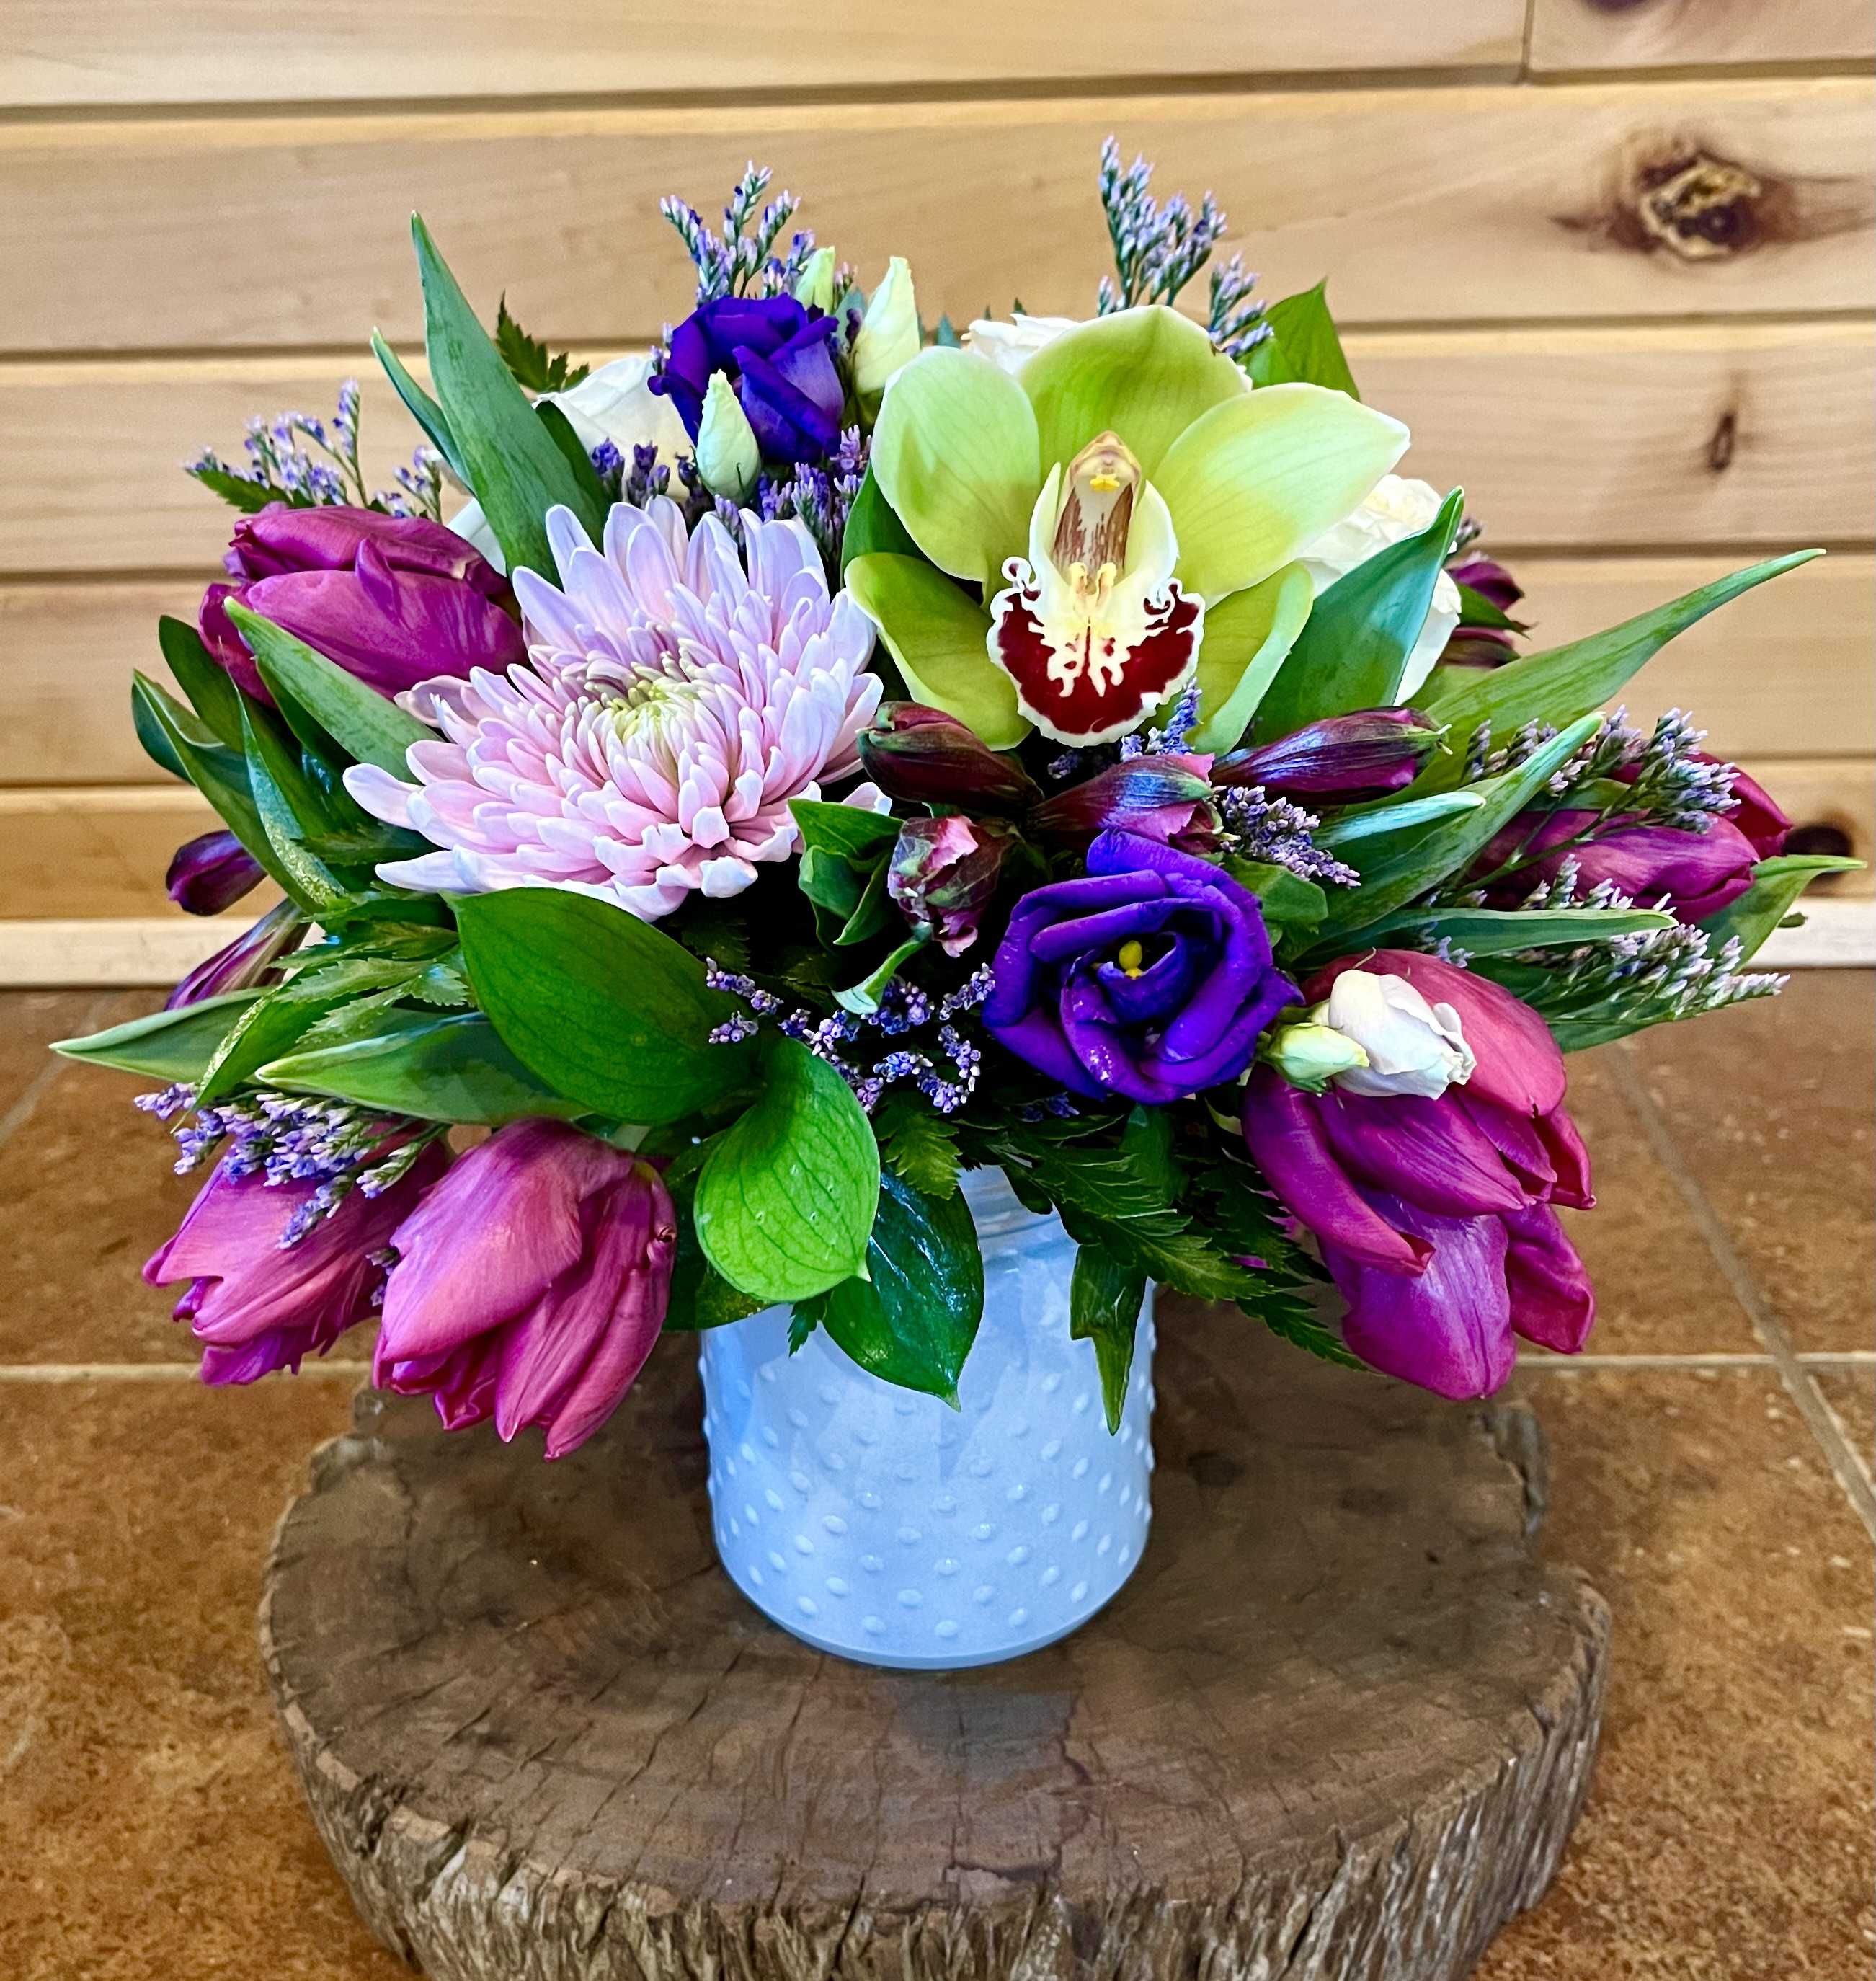 Studio Flora - Florists Windham ME - Flowers Windham 04062